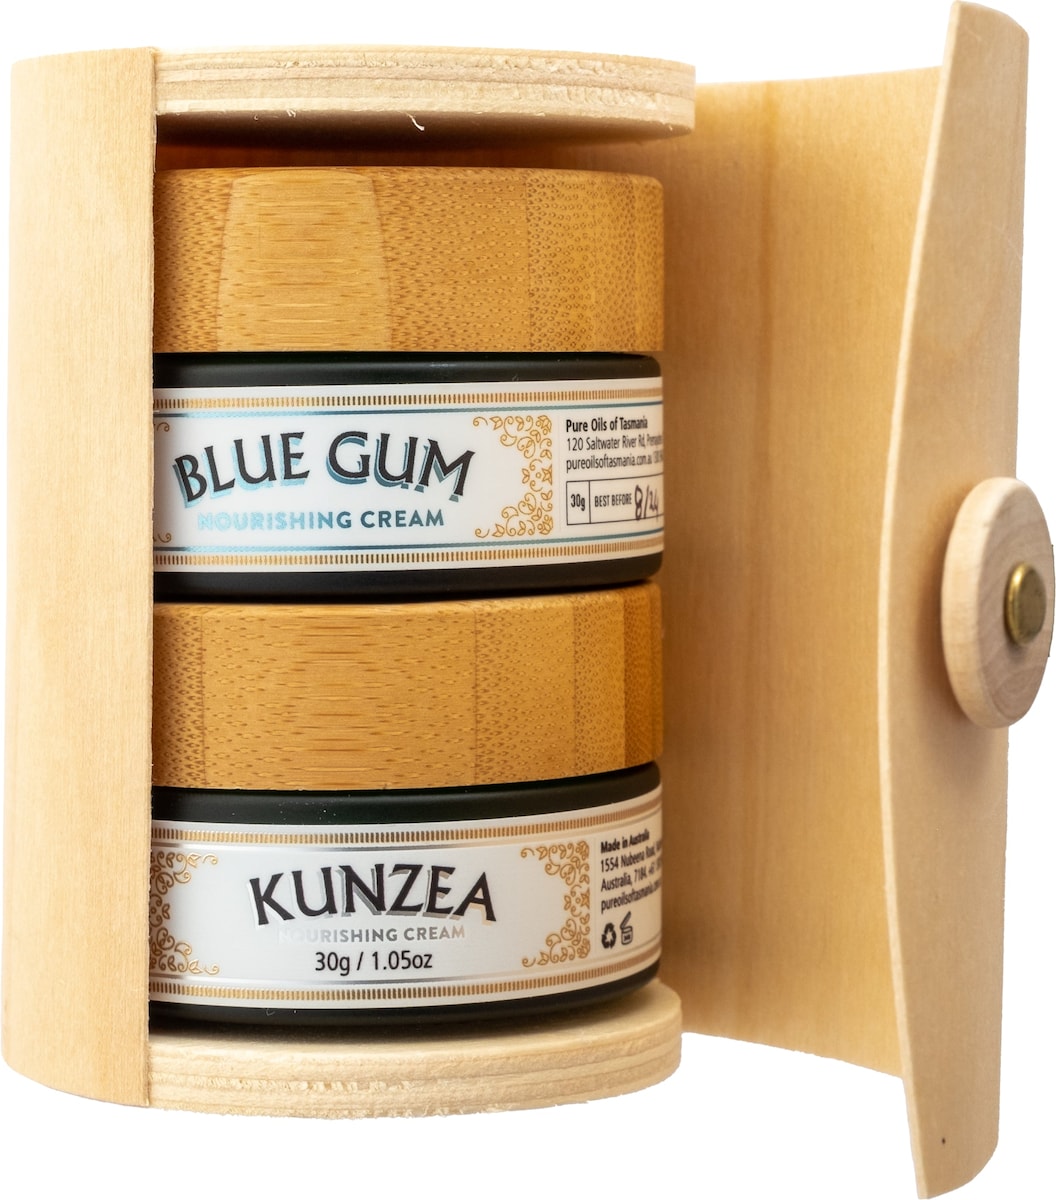 Pure Oils of Tasmania Double Cream Gift Set - Kunzea + Blue Gum Creams